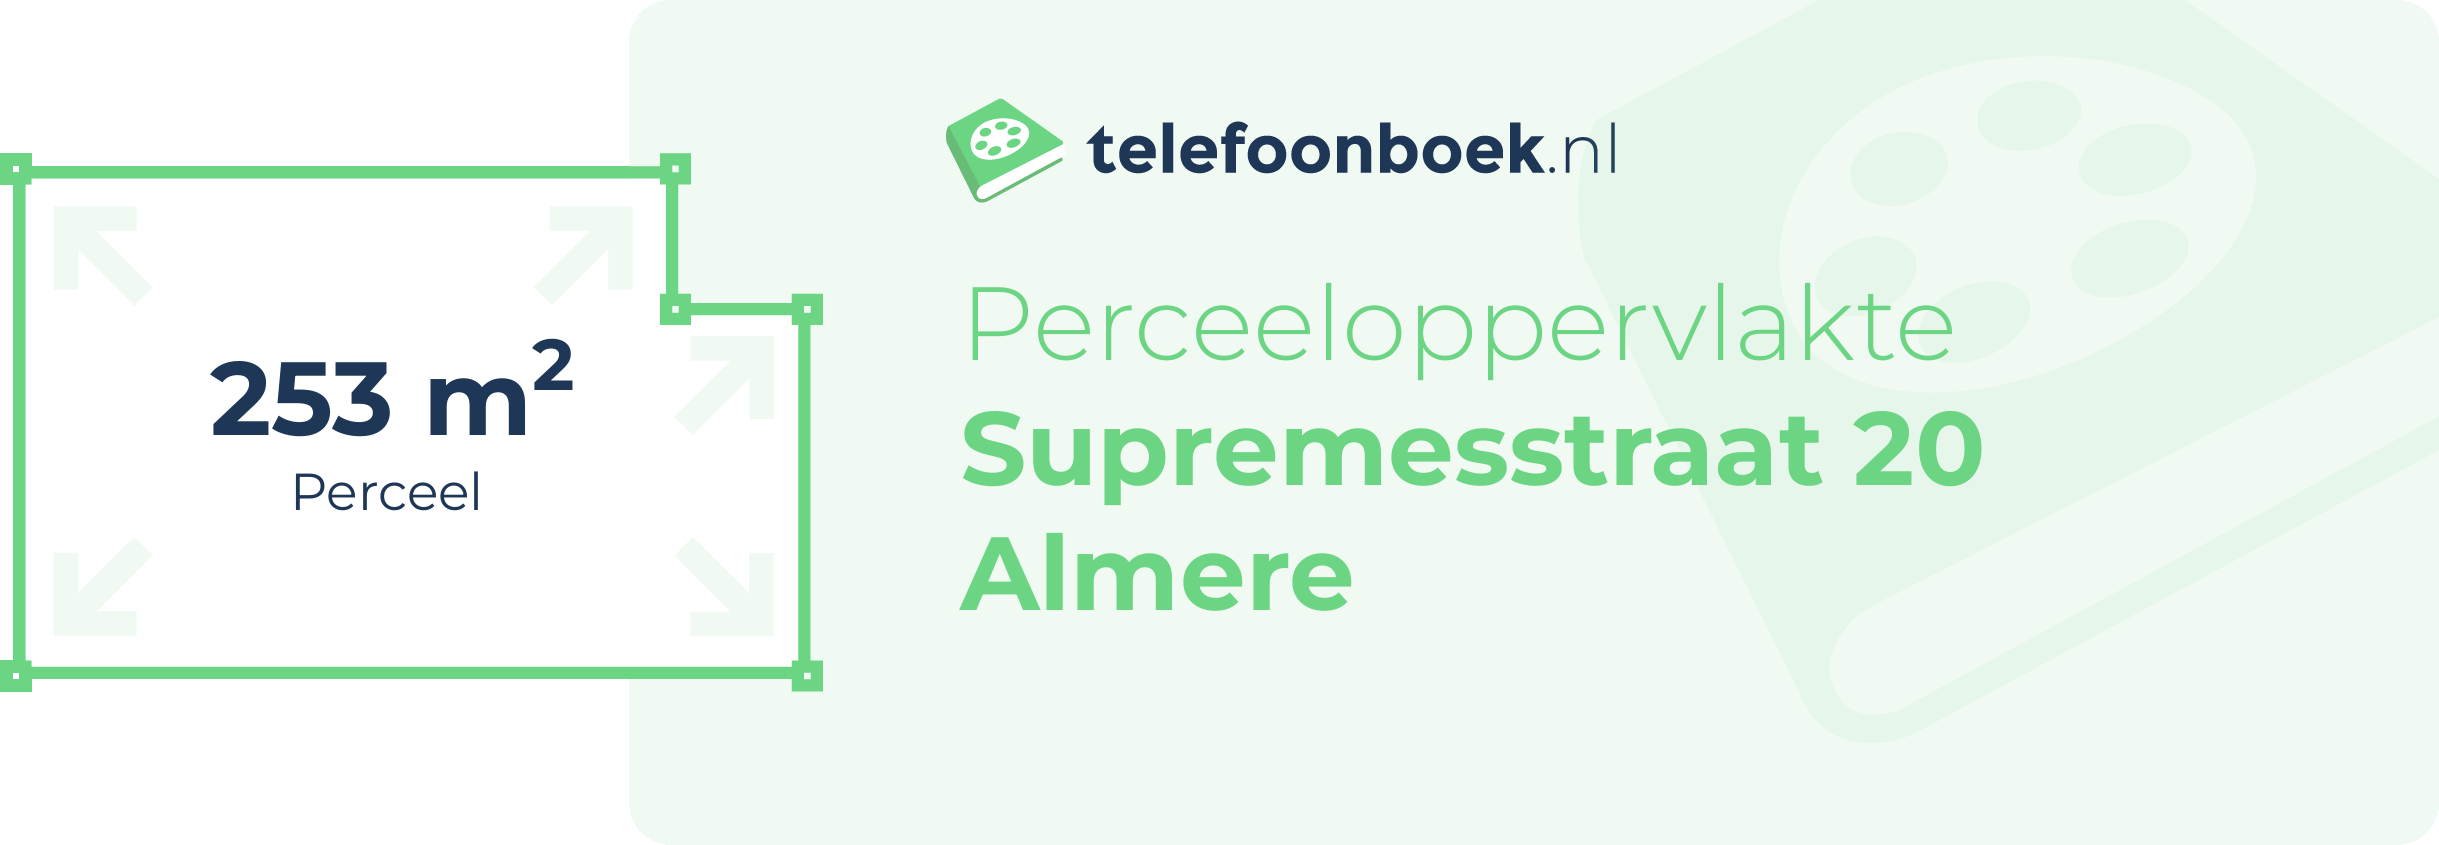 Perceeloppervlakte Supremesstraat 20 Almere